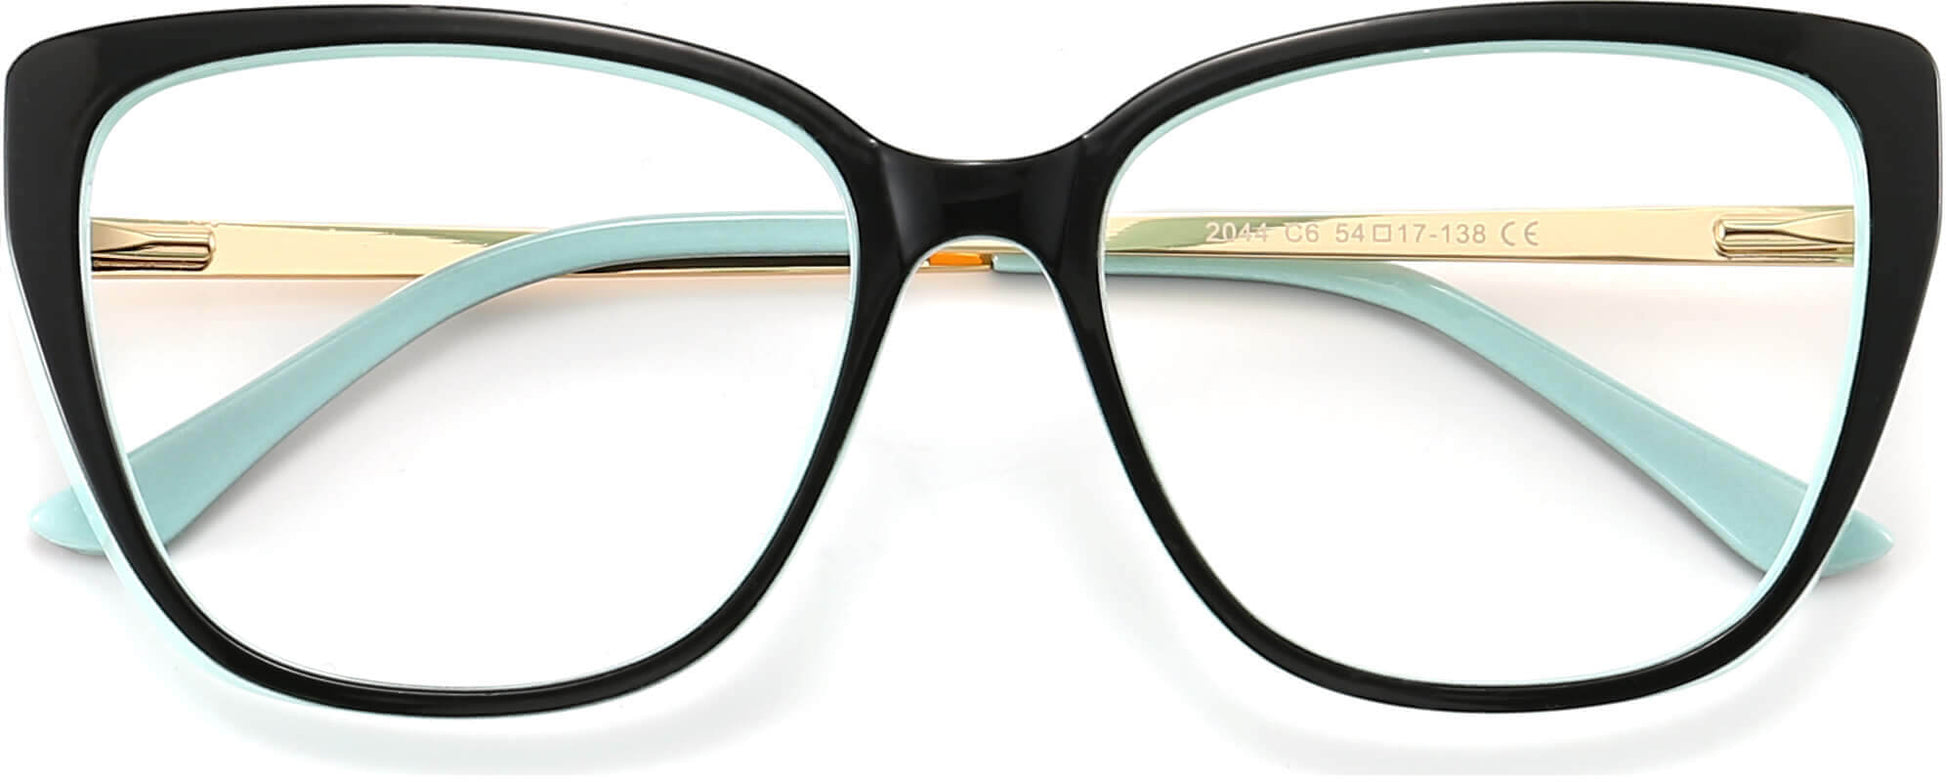 Elianna Cateye Black Eyeglasses from ANRRI, closed view